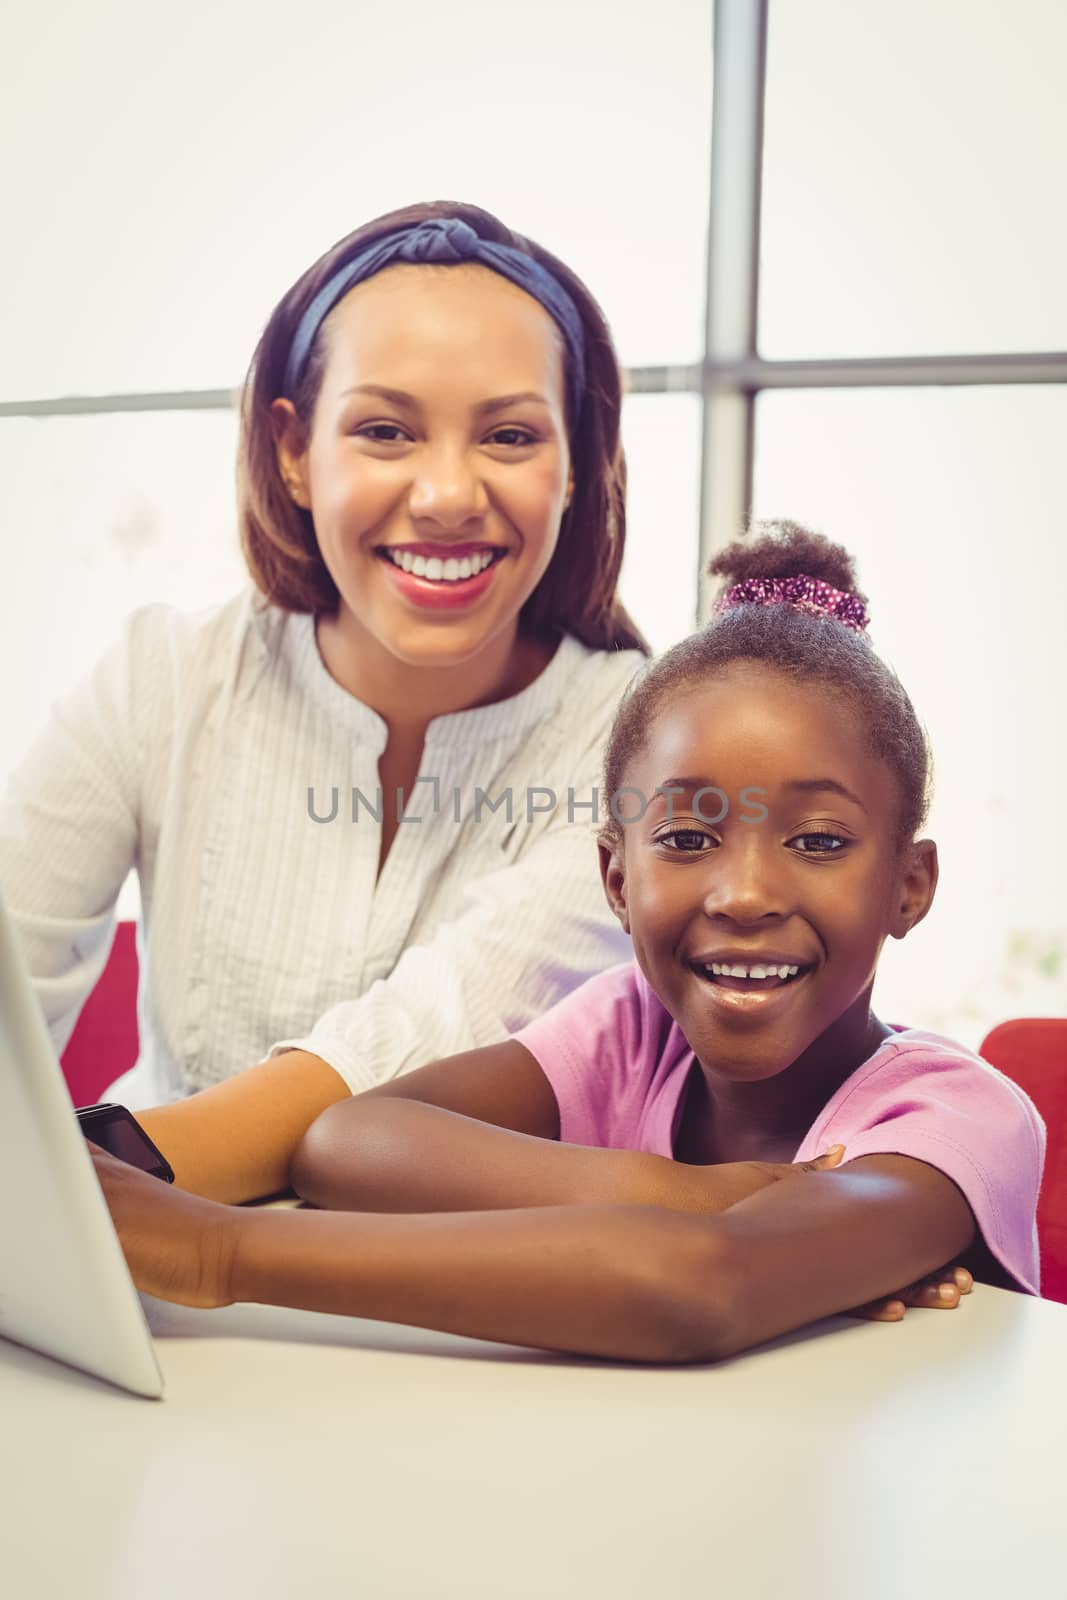 Teacher and school girl using digital tablet in classroom by Wavebreakmedia